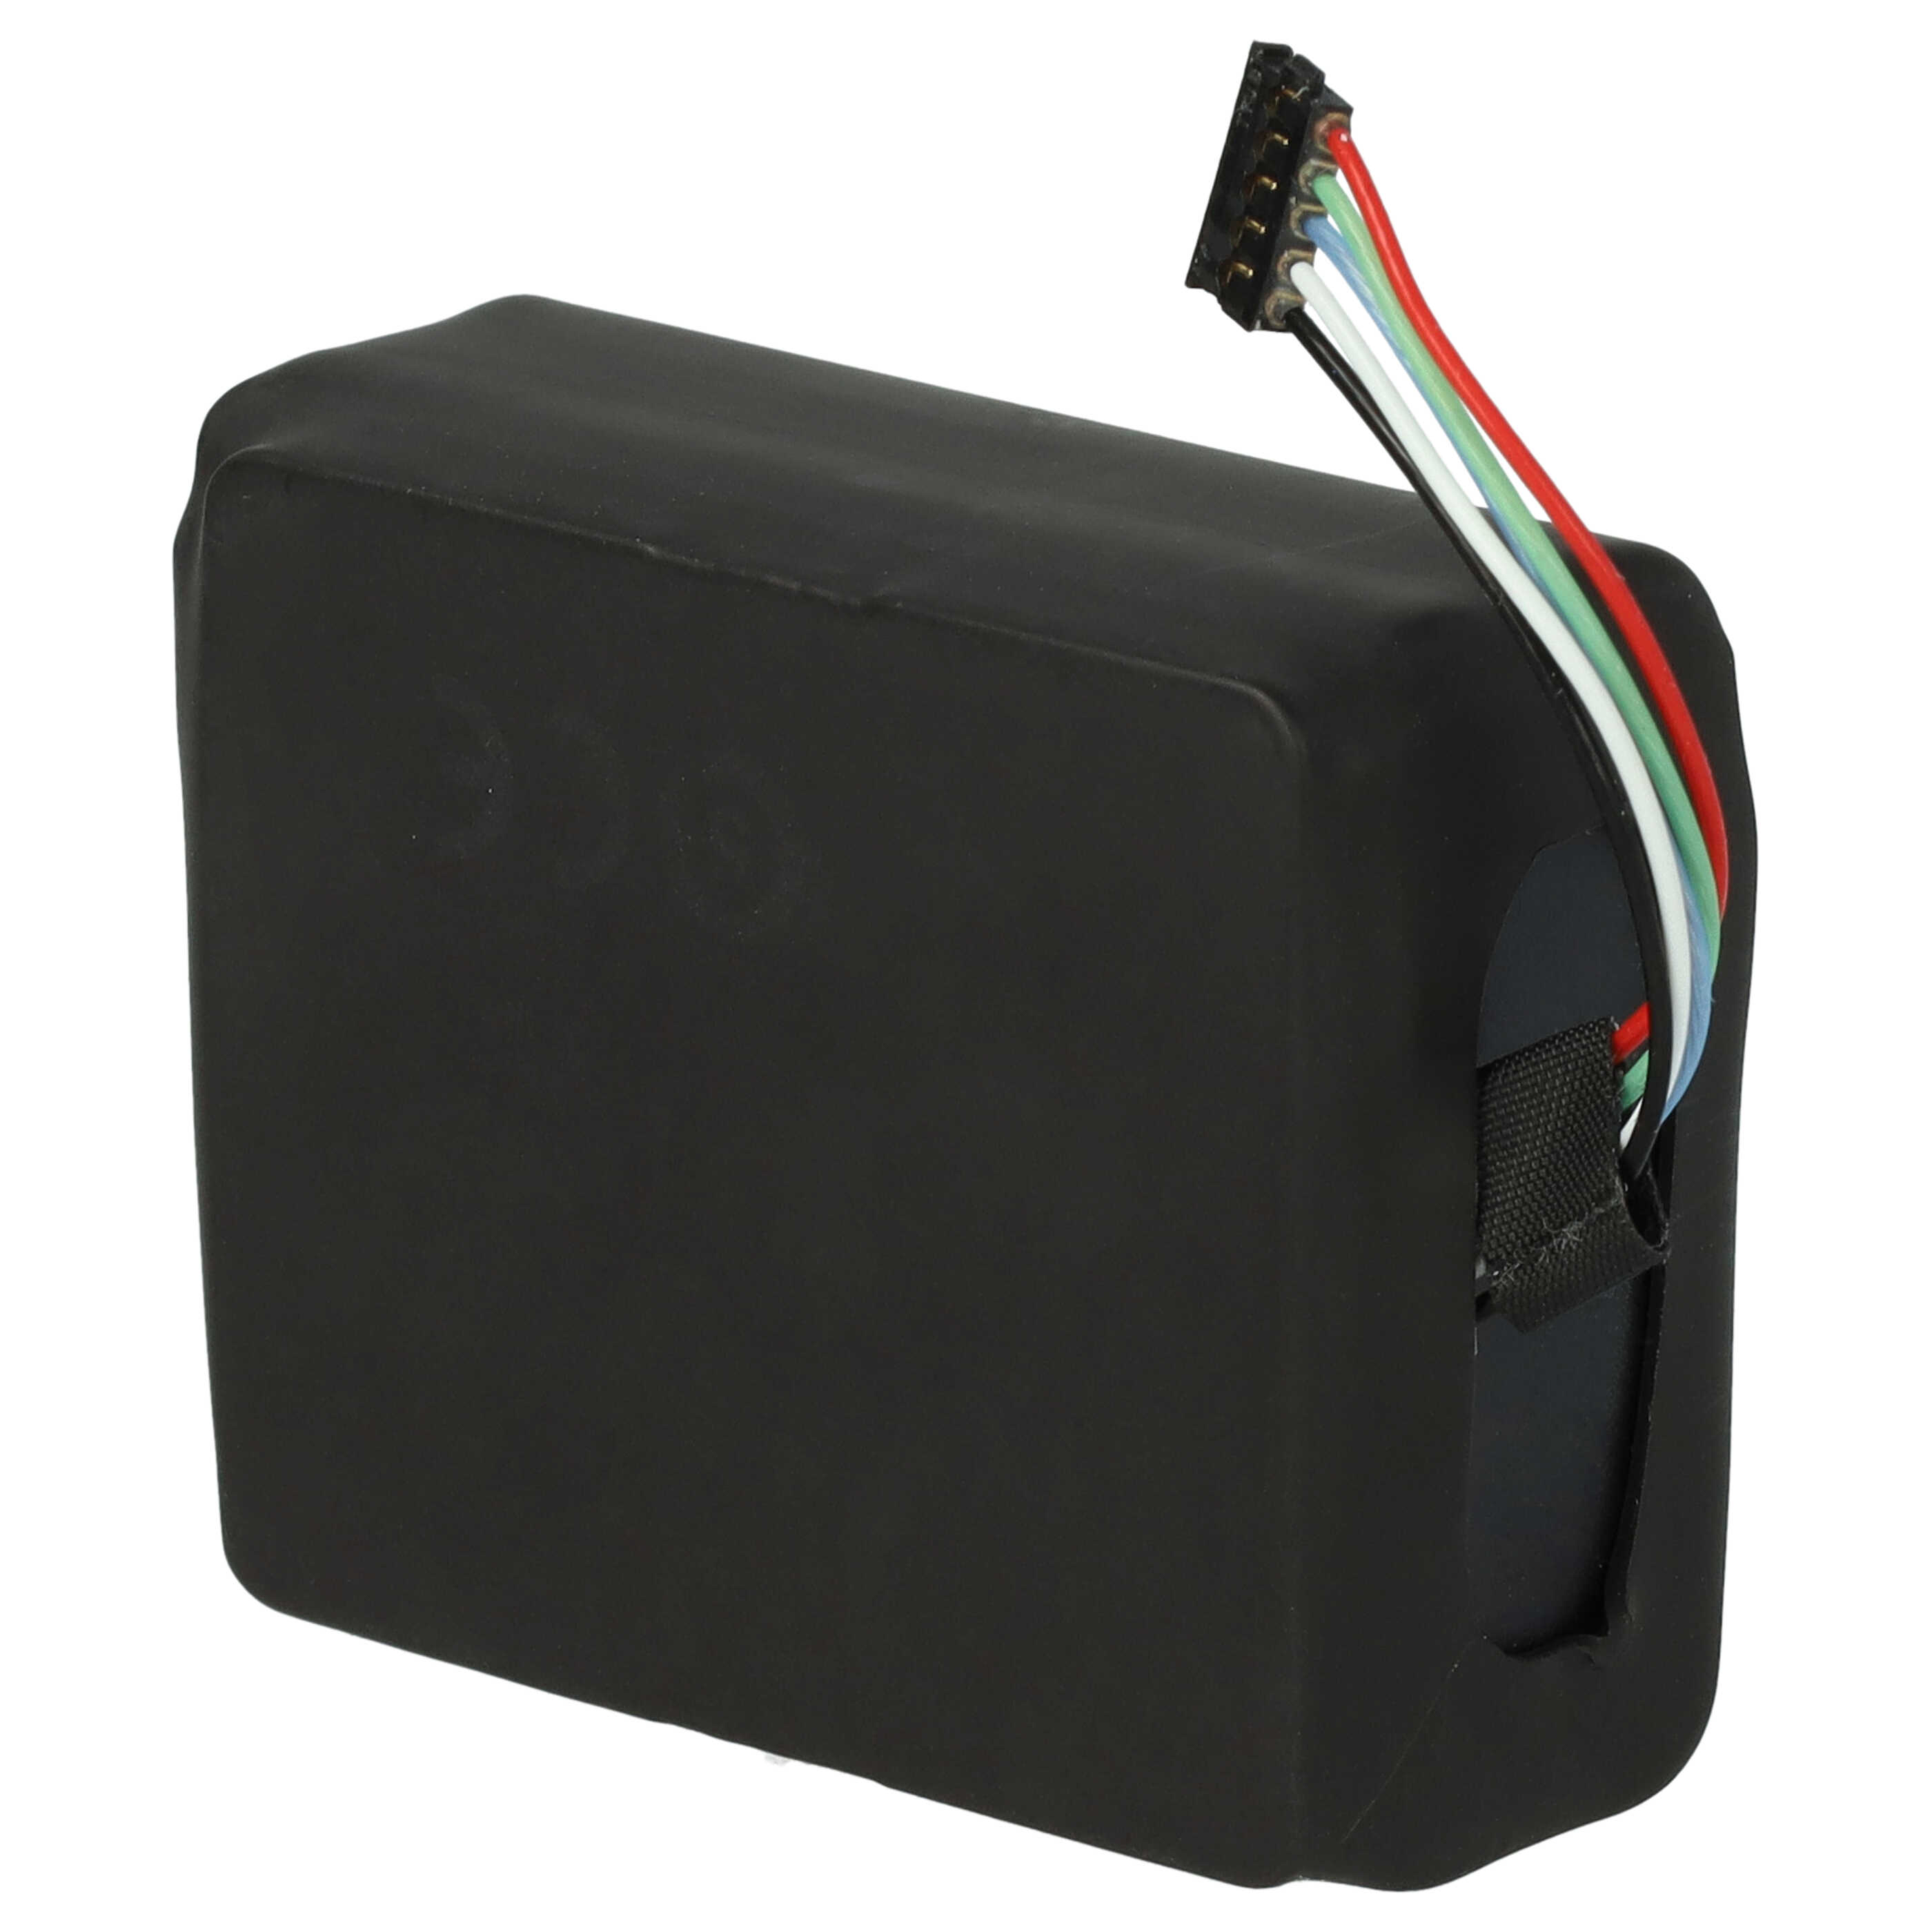 Batteria sostituisce Arlo 308-10033-01, A-3 per babyphone Arlo - 2200mAh 3,7V Li-Ion